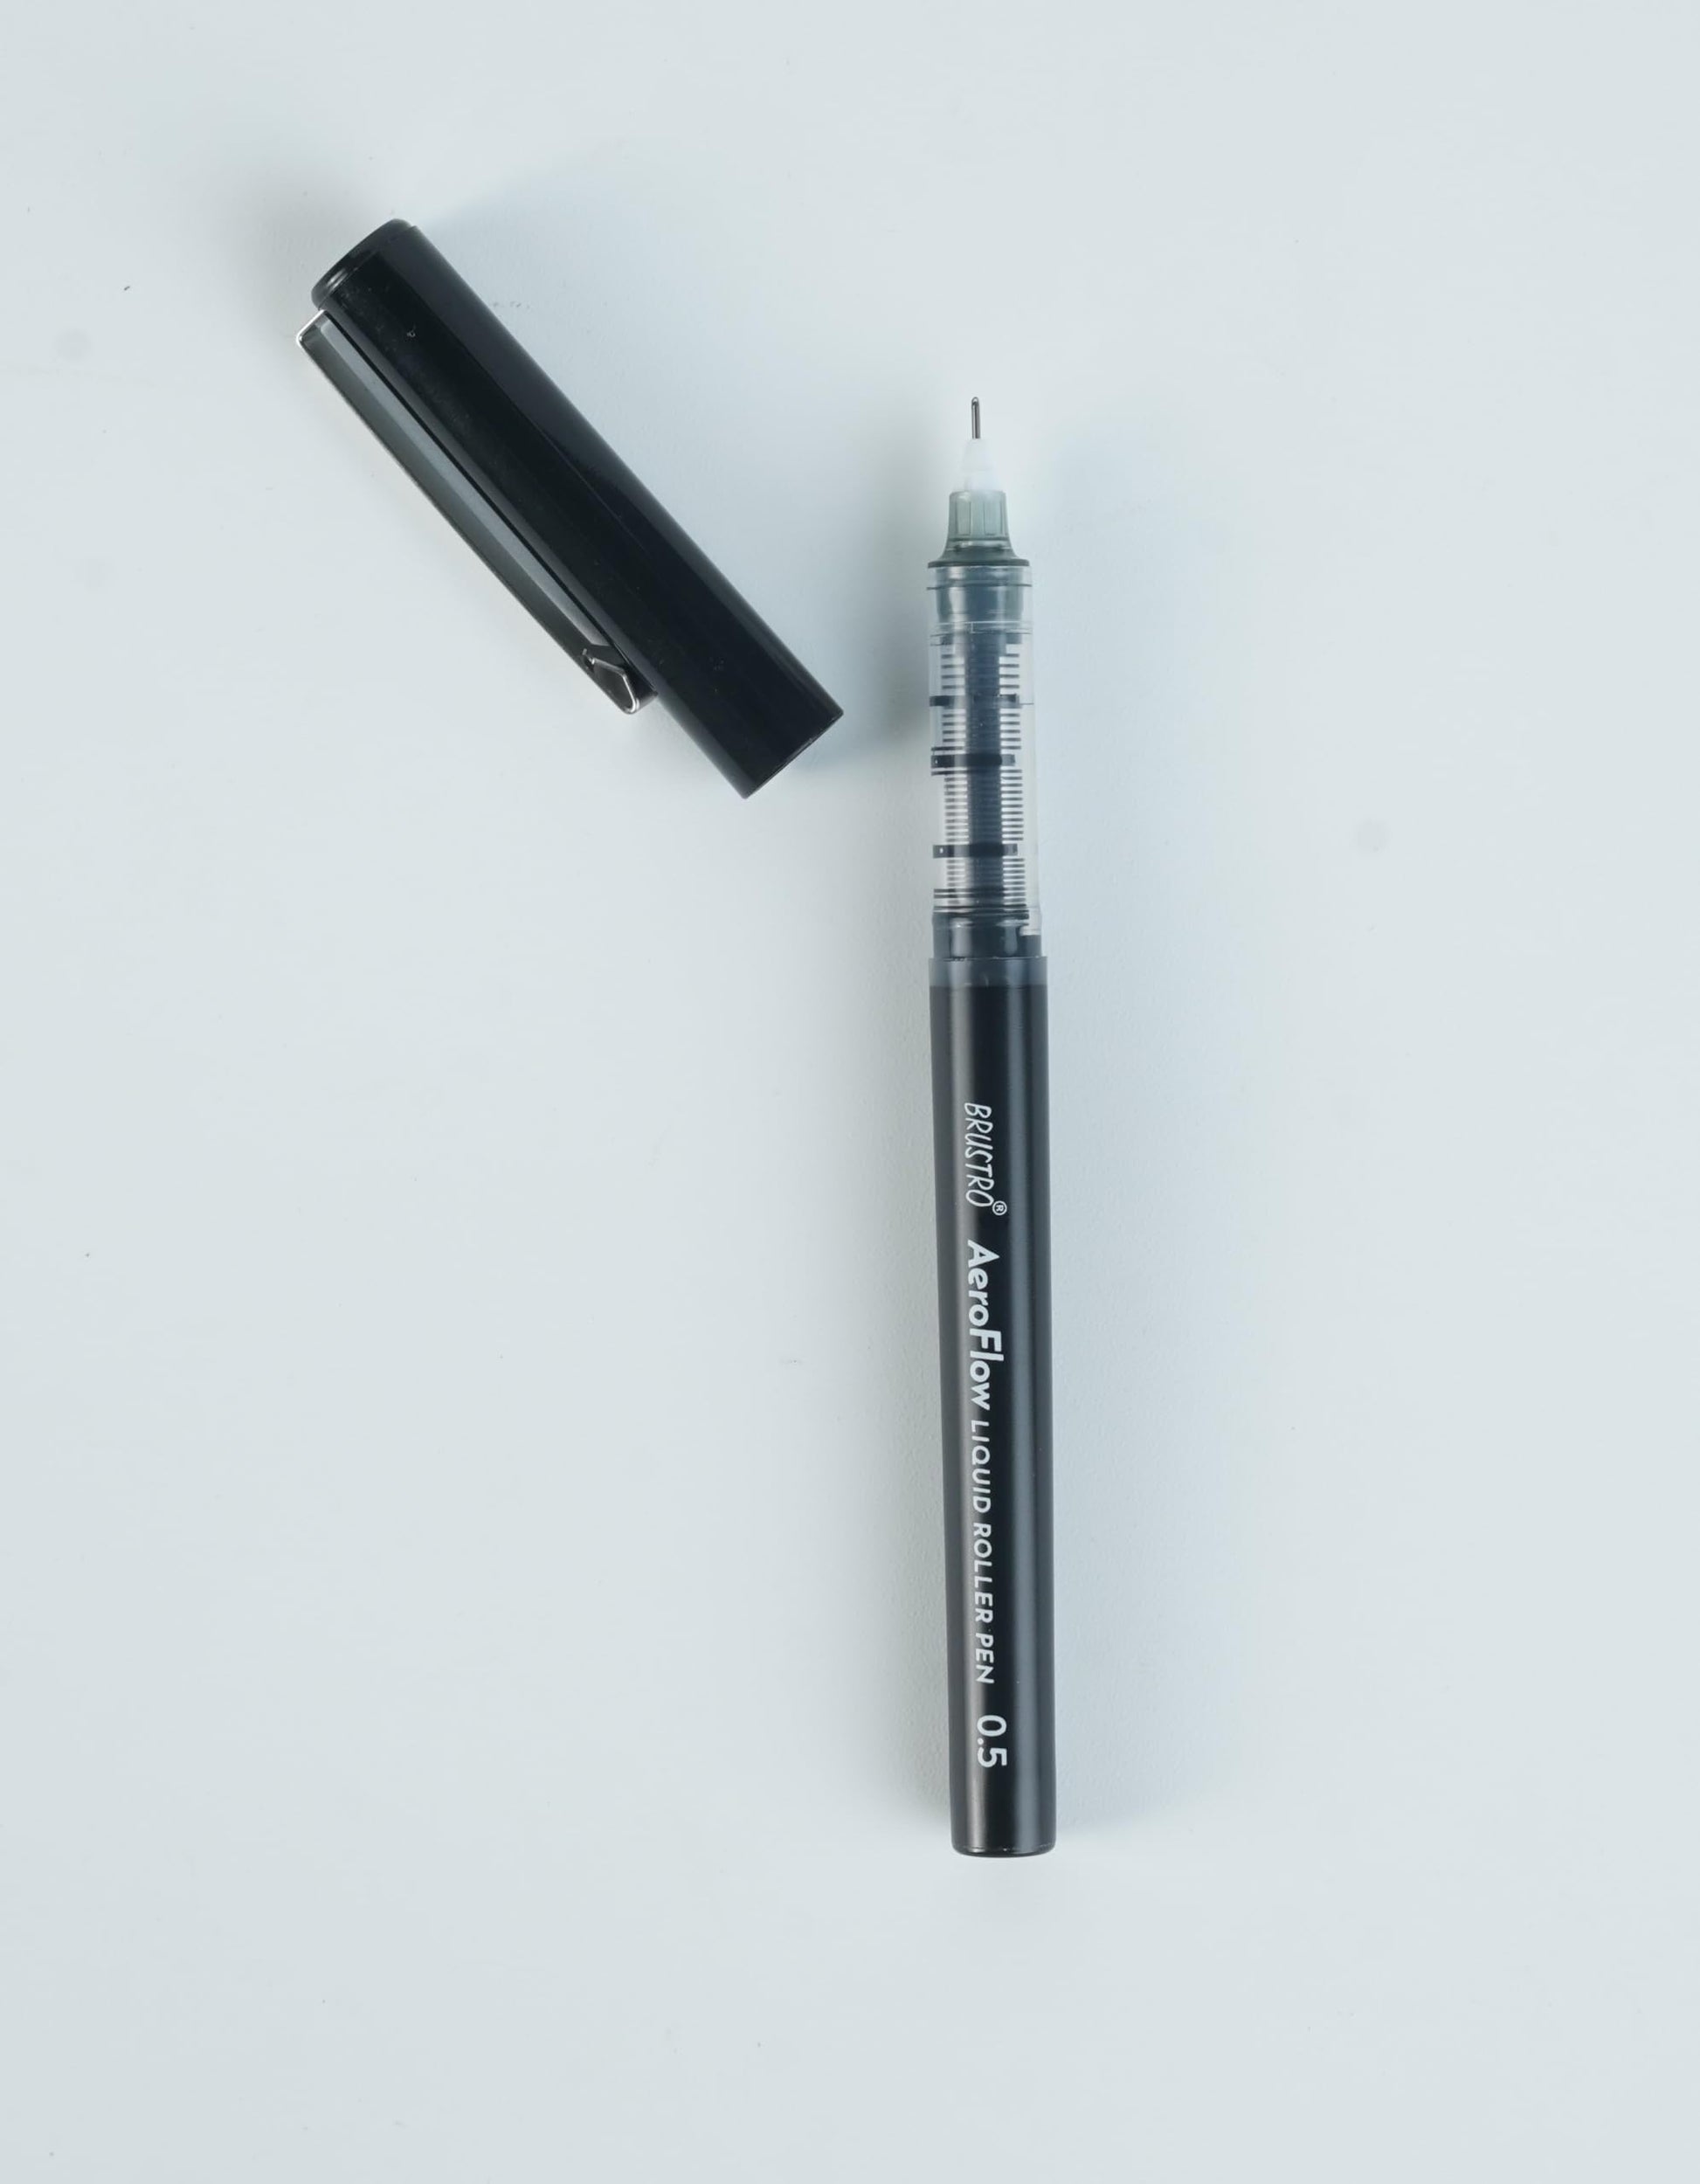 Pentel Pocket Brush Pen Pigment Ink Refills, Grey,2/Pkg. 